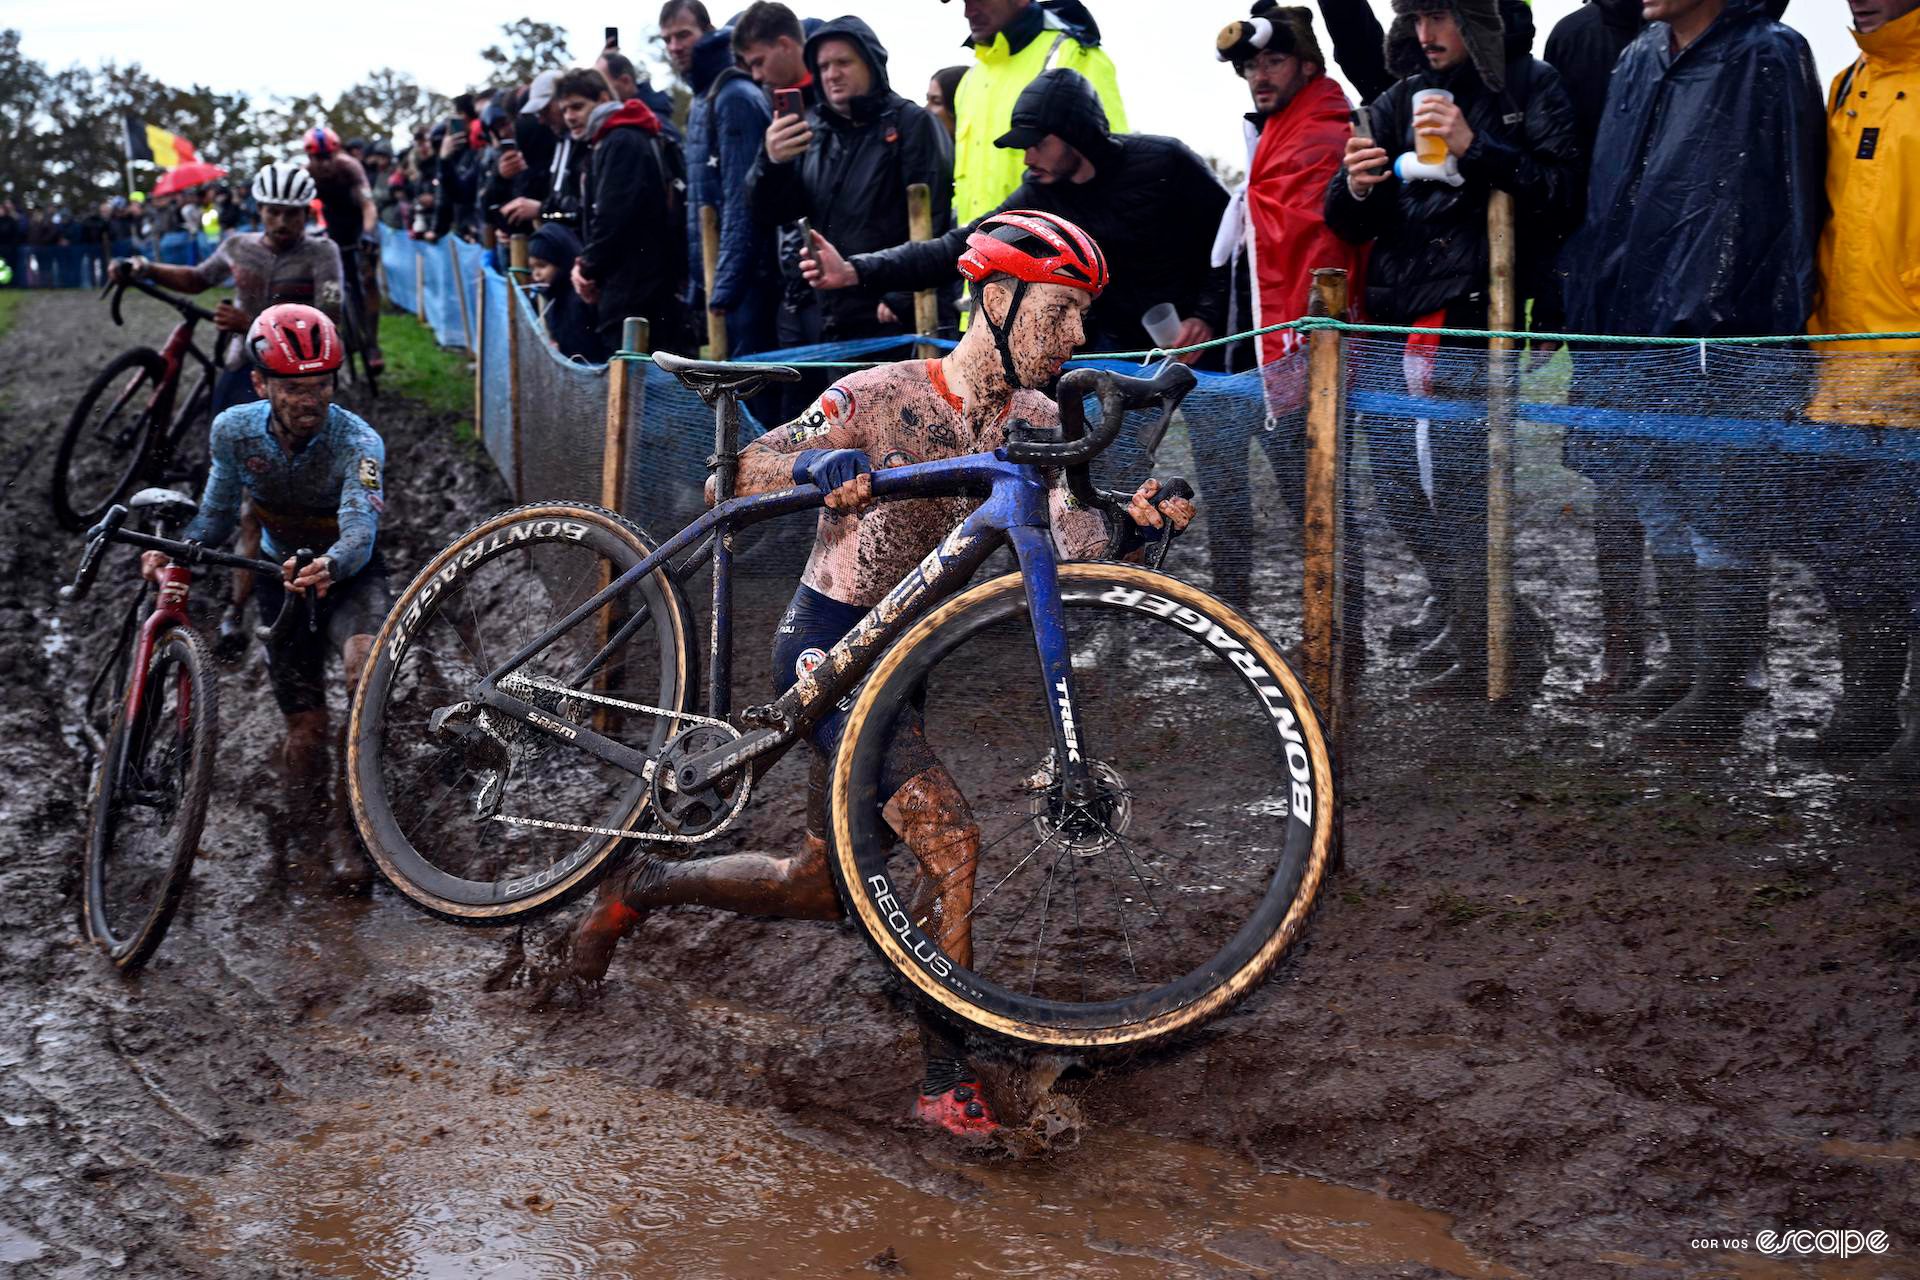 Lars van der Haar lifts his bike aloft as he runs through deep waterlogged mud during the european cyclocross champs.